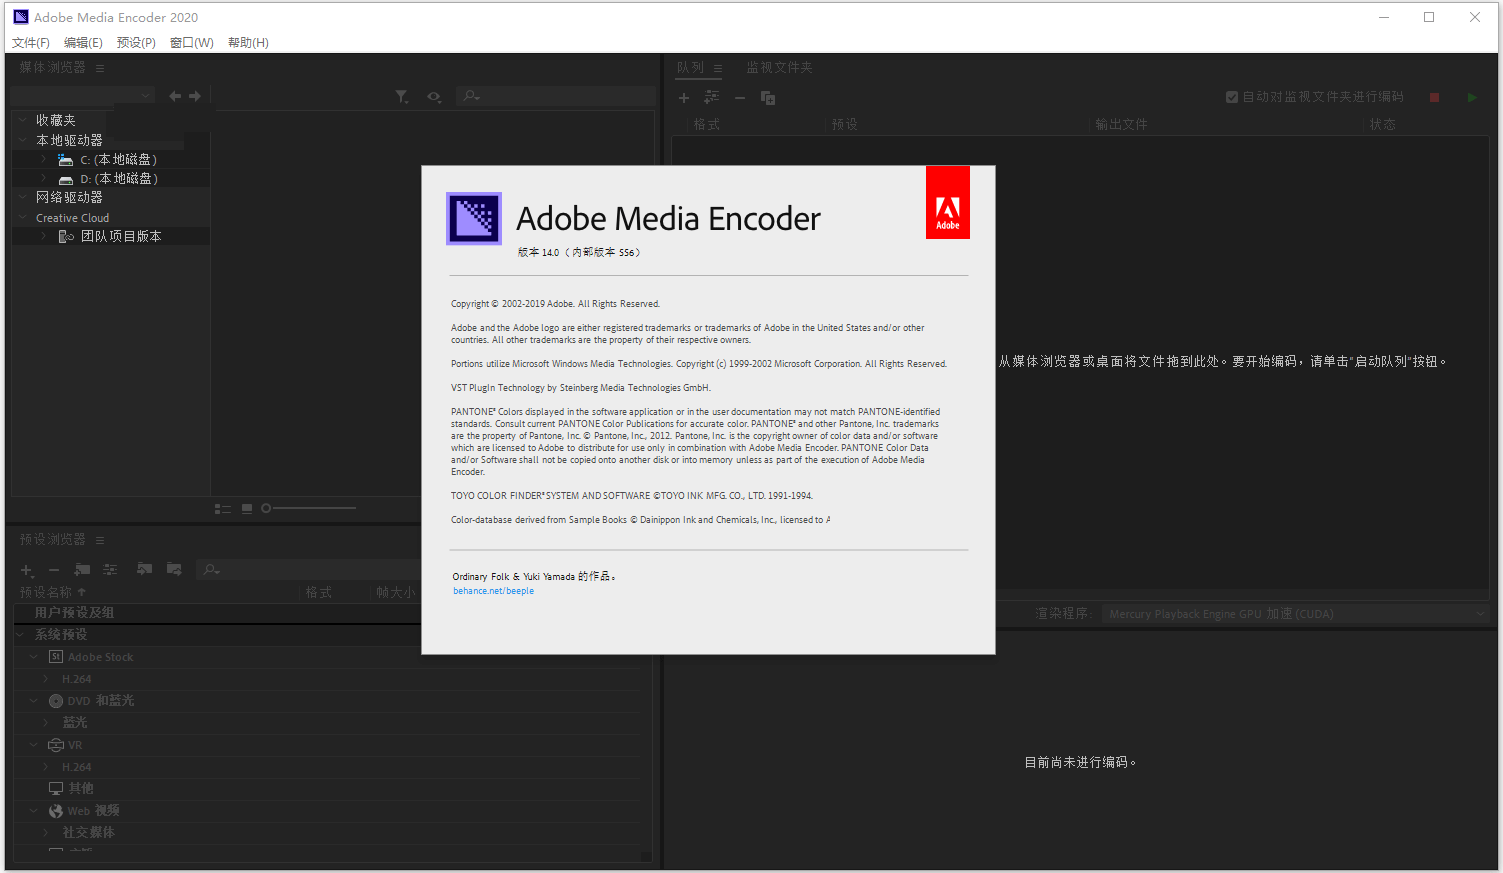 视频/音频编码应用 Adobe Media Encoder 2020 v14.7.0 安装版